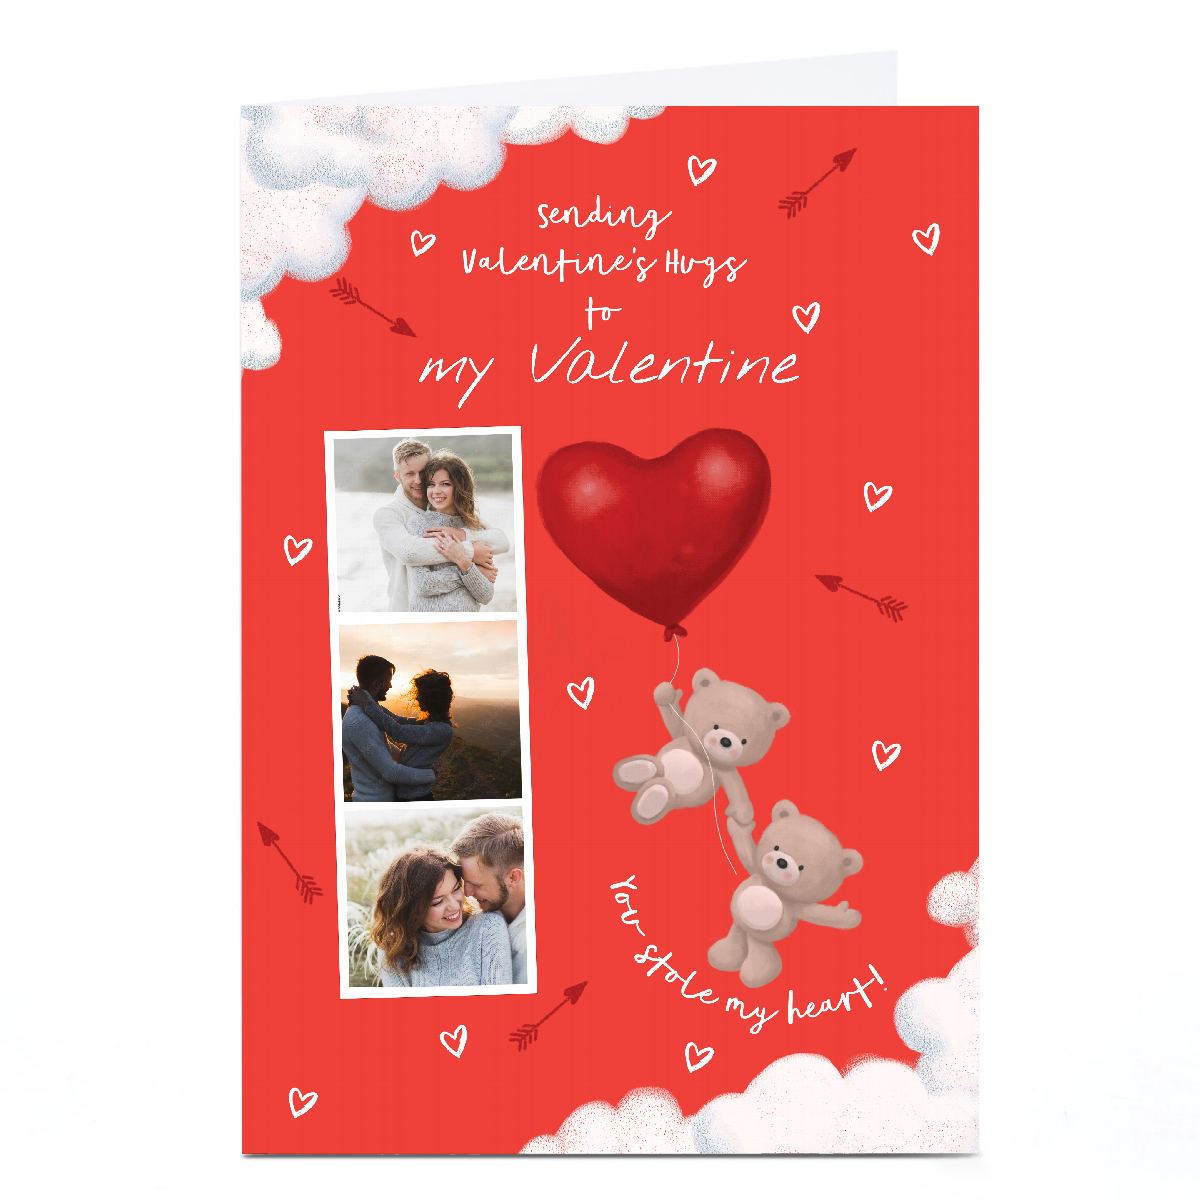 Photo Hugs Valentine's Day Card - Stole My Heart, My Valentine